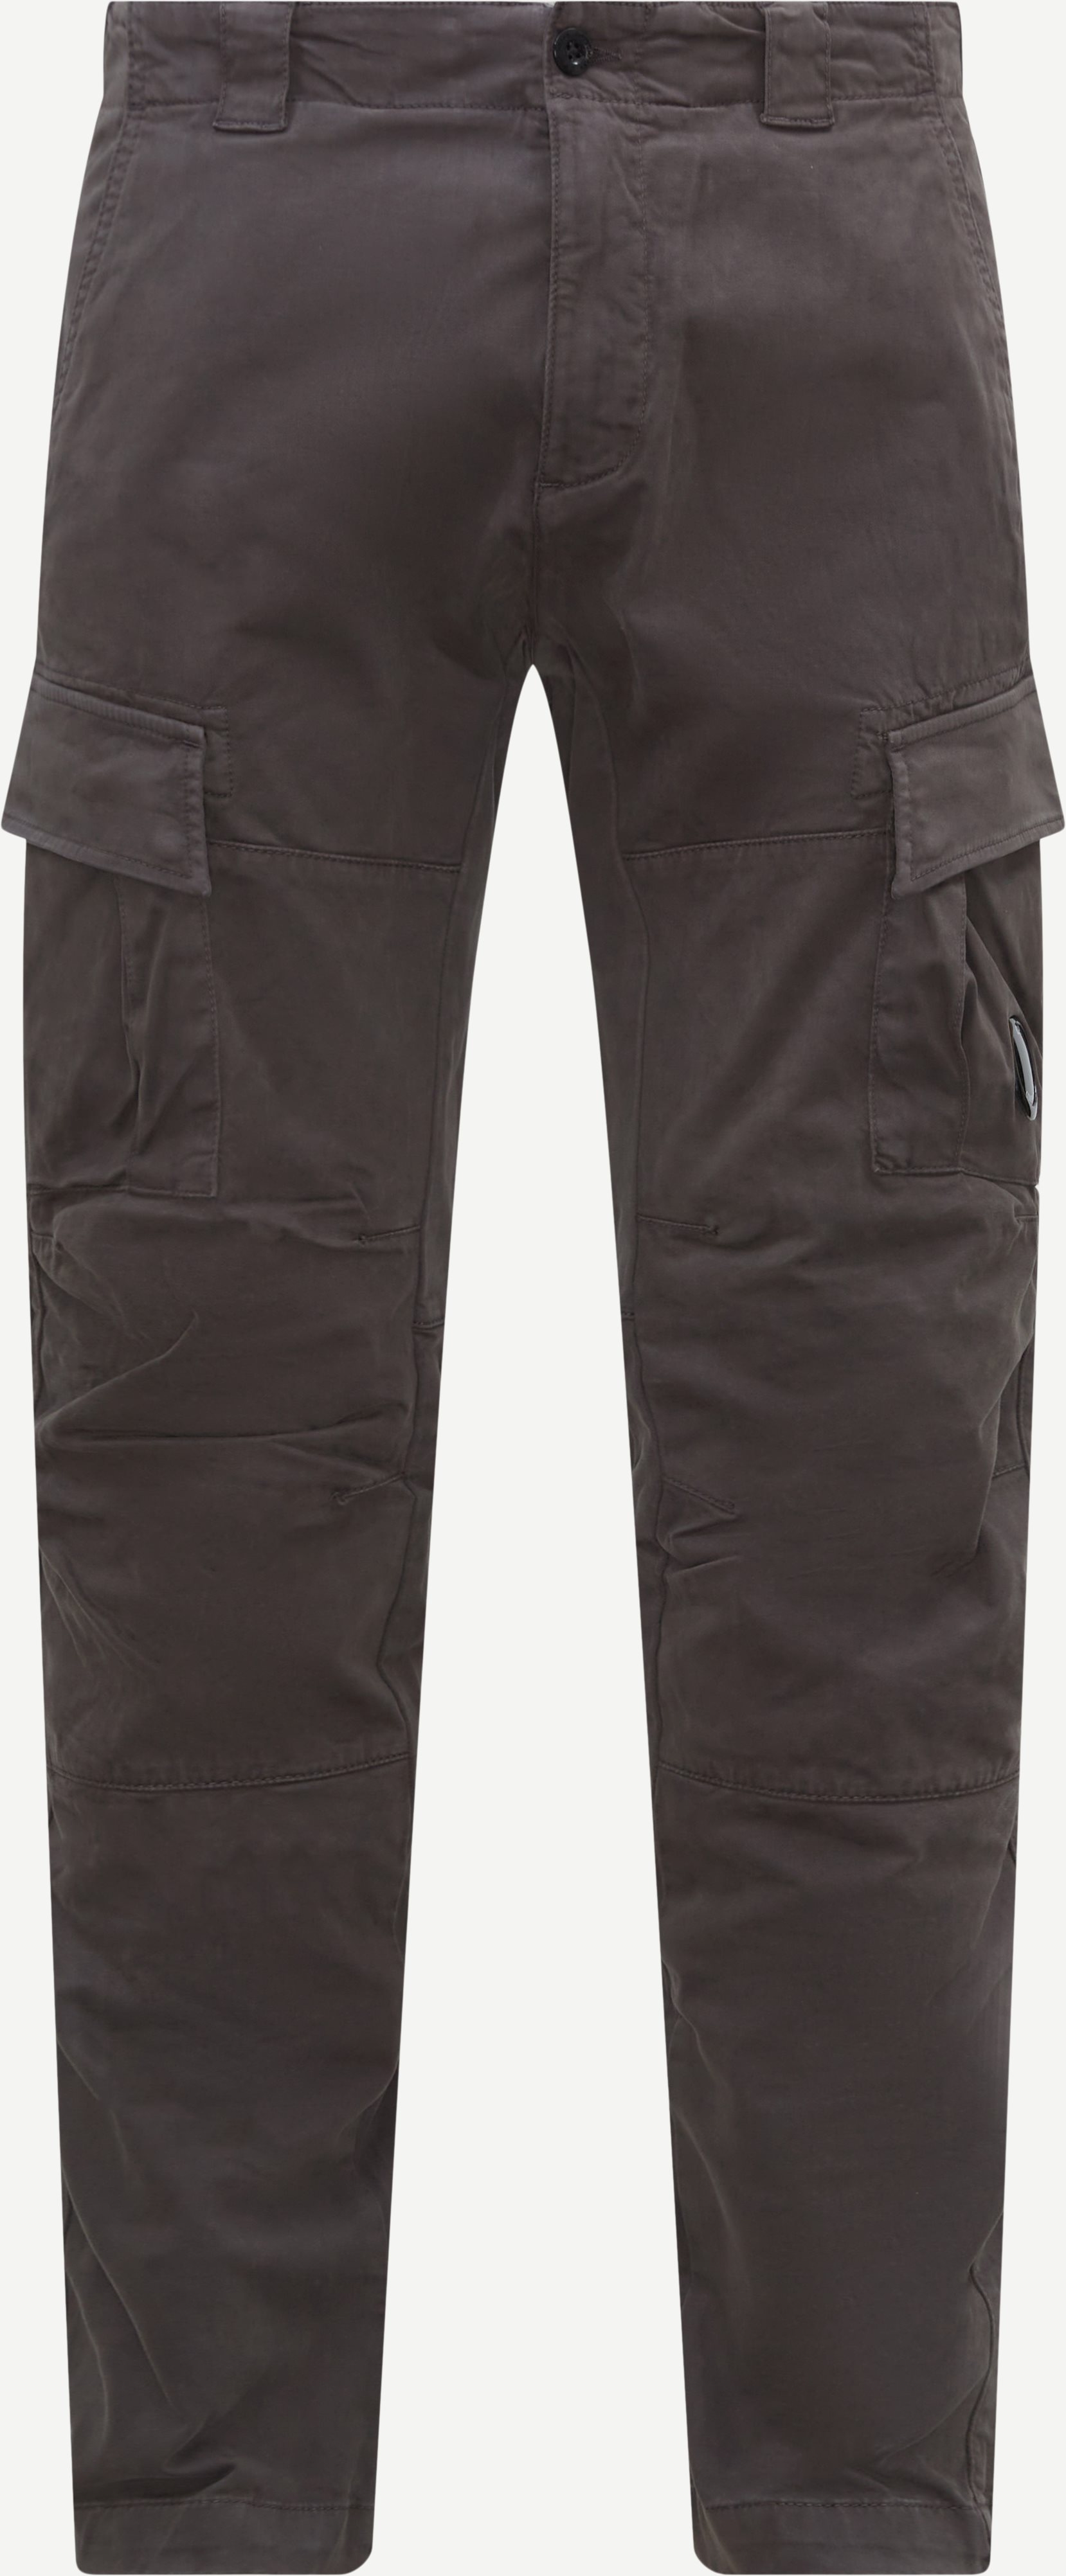 Satin Stretch Cargo Pants - Bukser - Regular fit - Grå